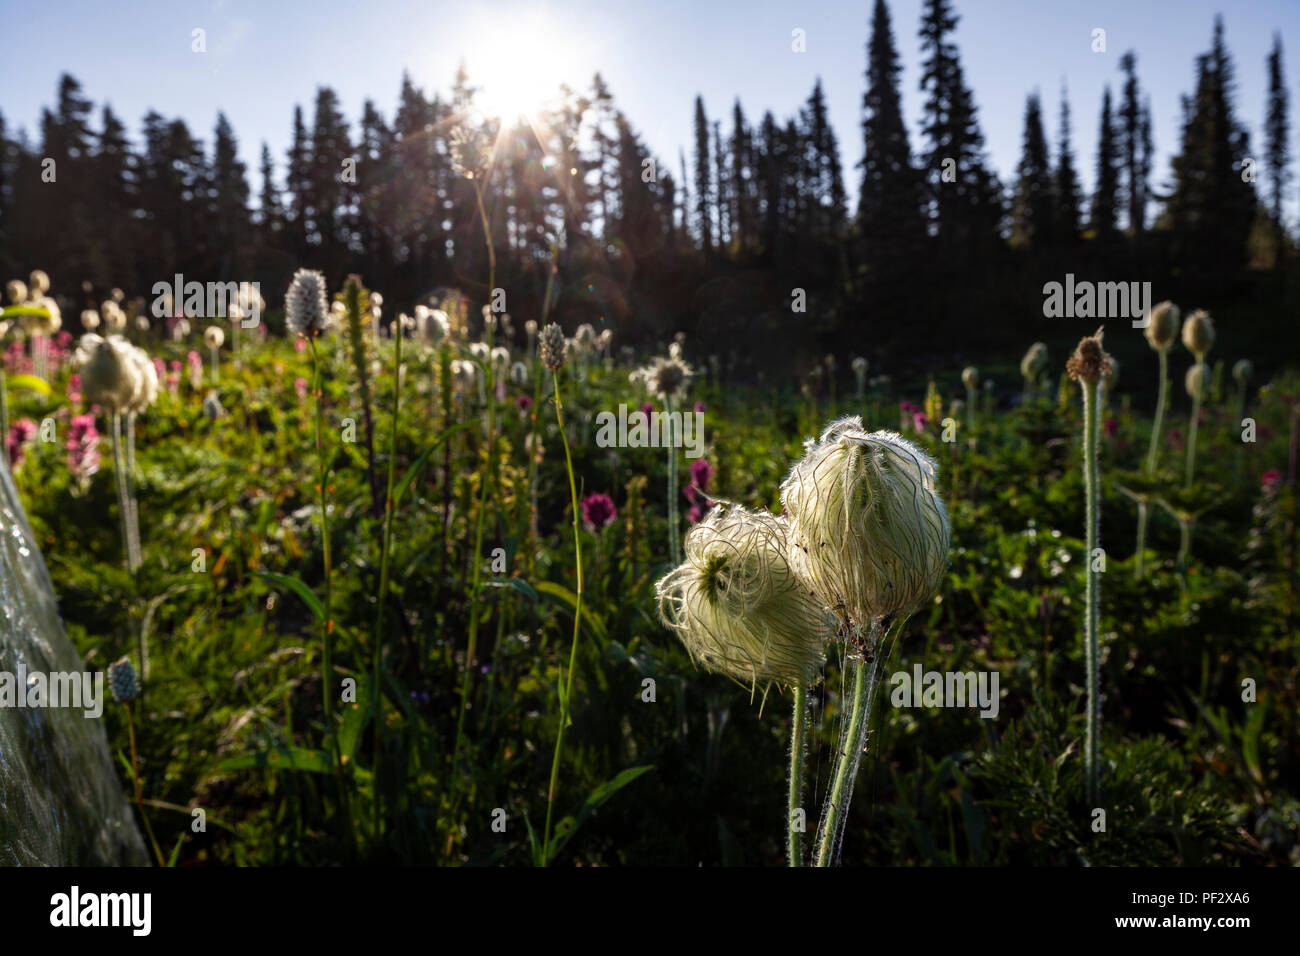 WA14820-00...WASHINGTON - Western Anemone flower in Mount Rainier National Park. Stock Photo